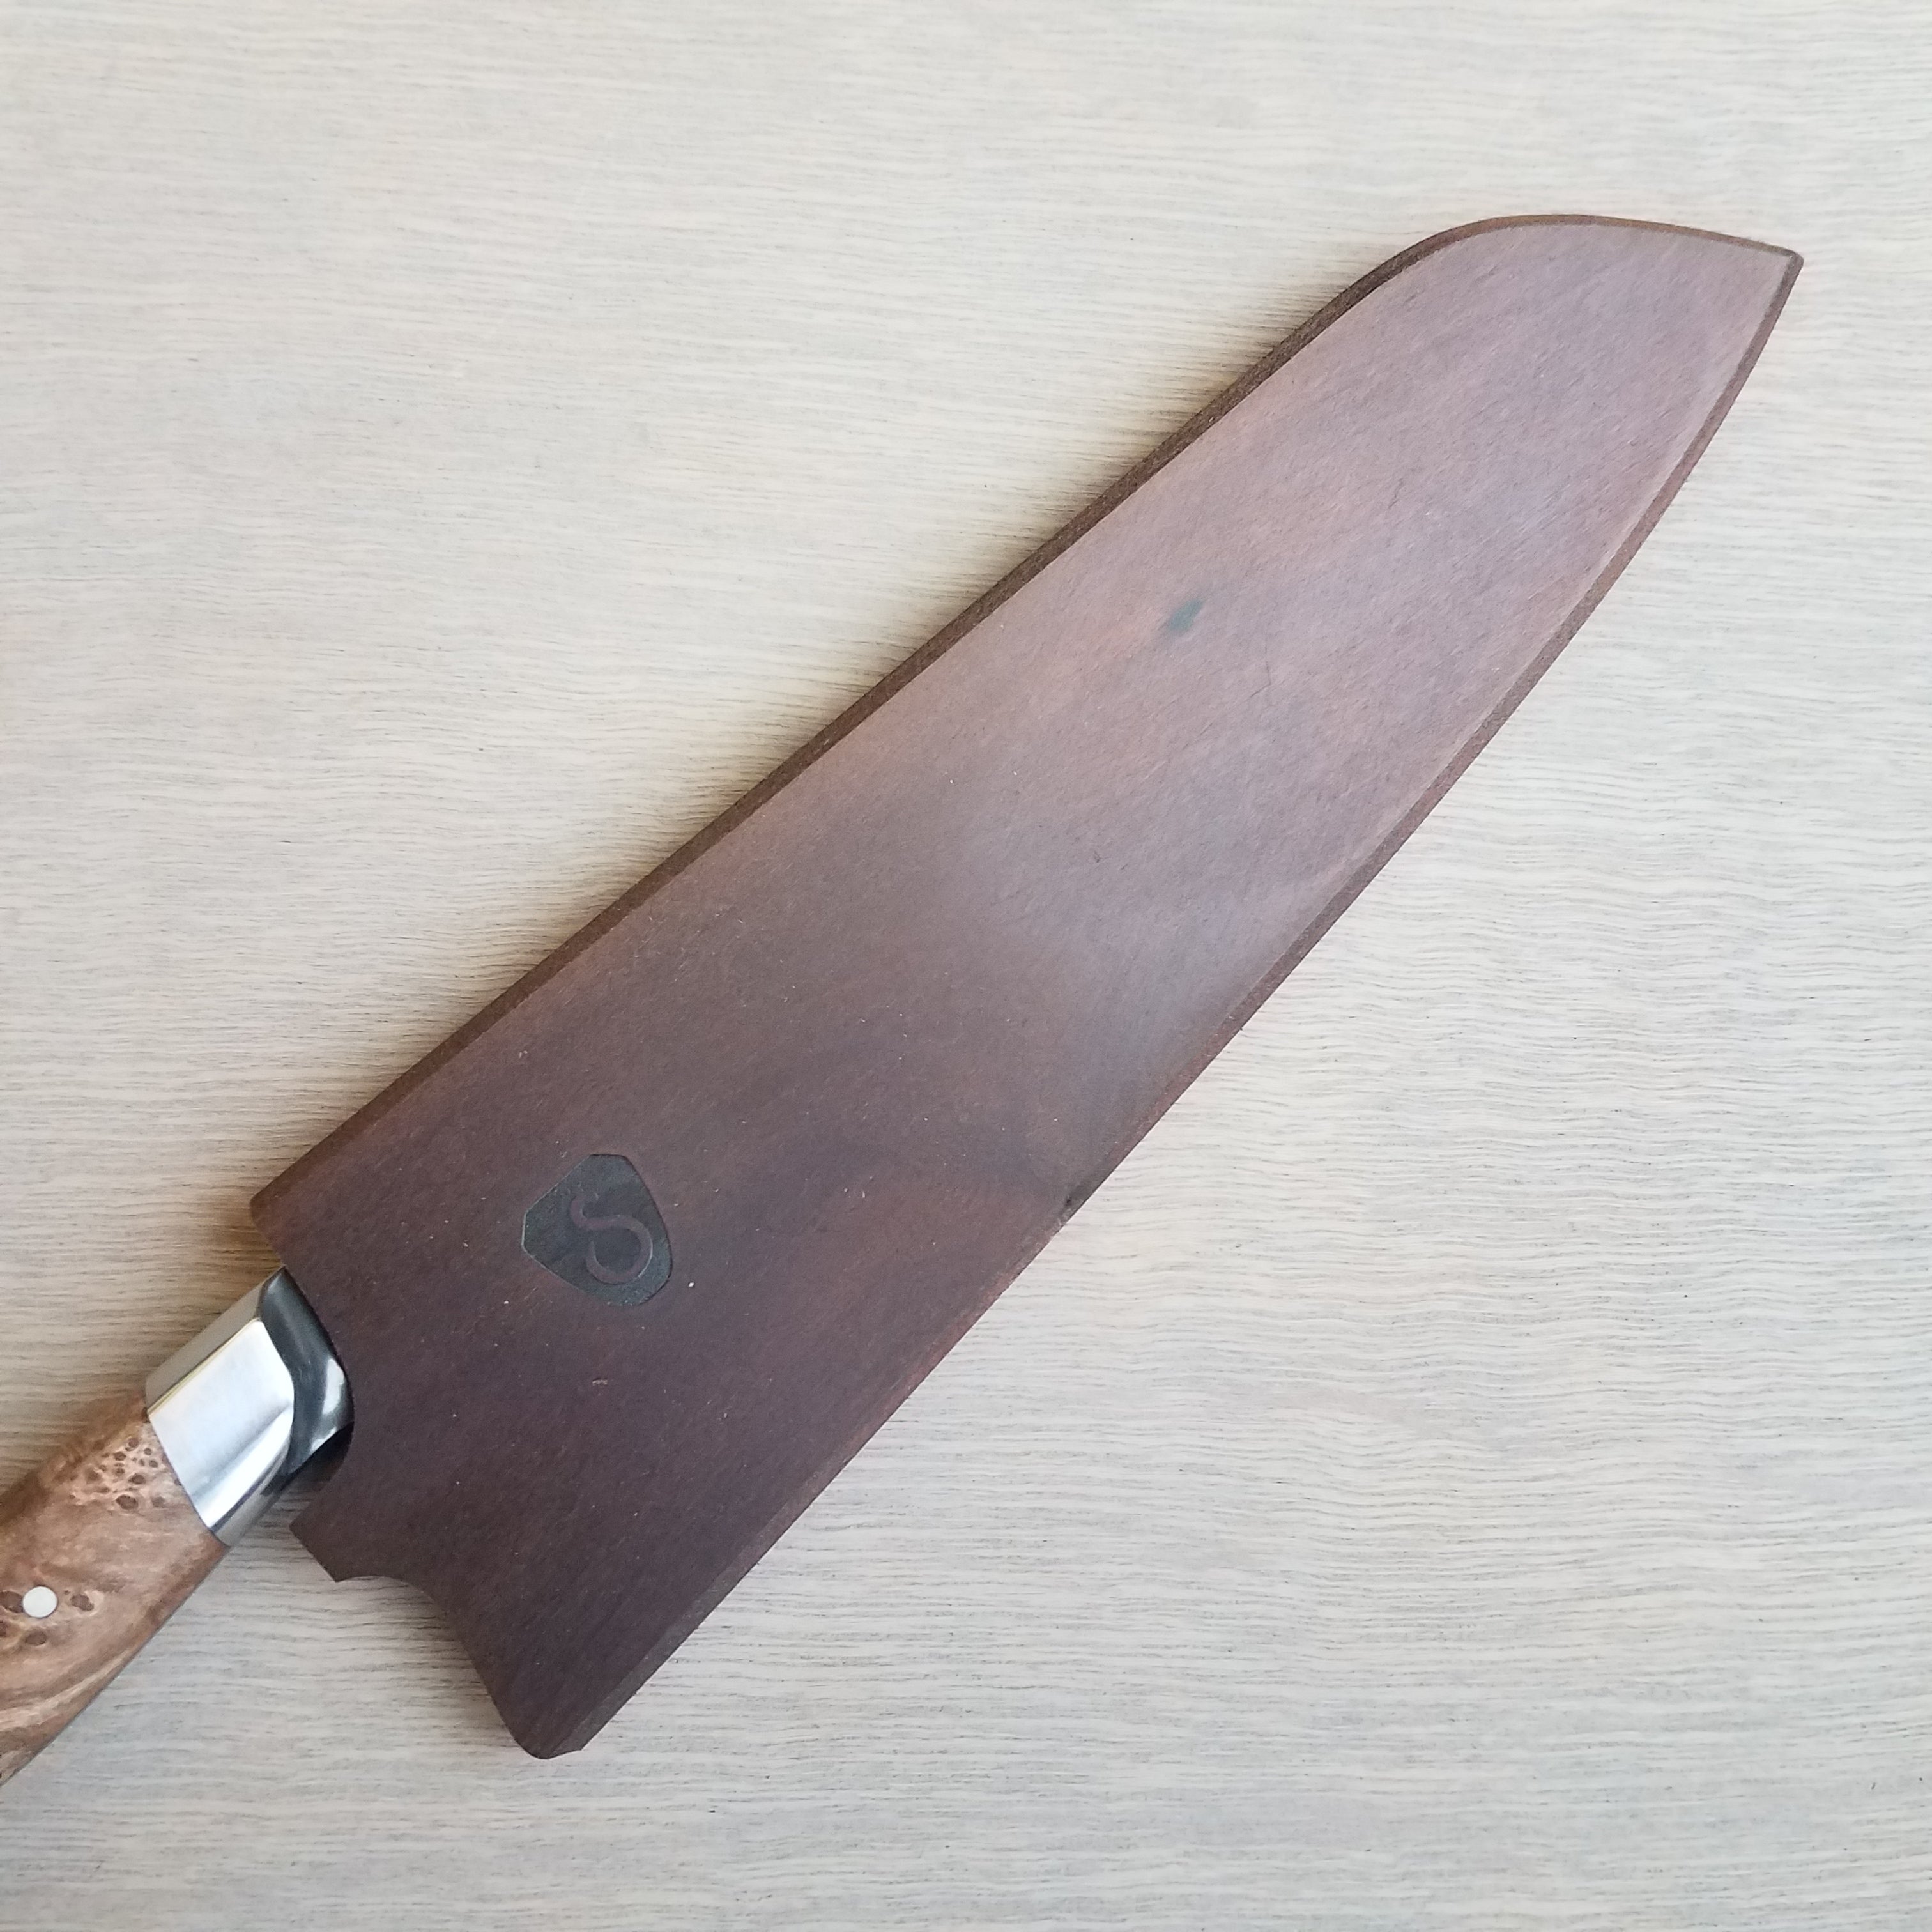 8 Carbon Steel Chef Knife - STEELPORT Knife Co.